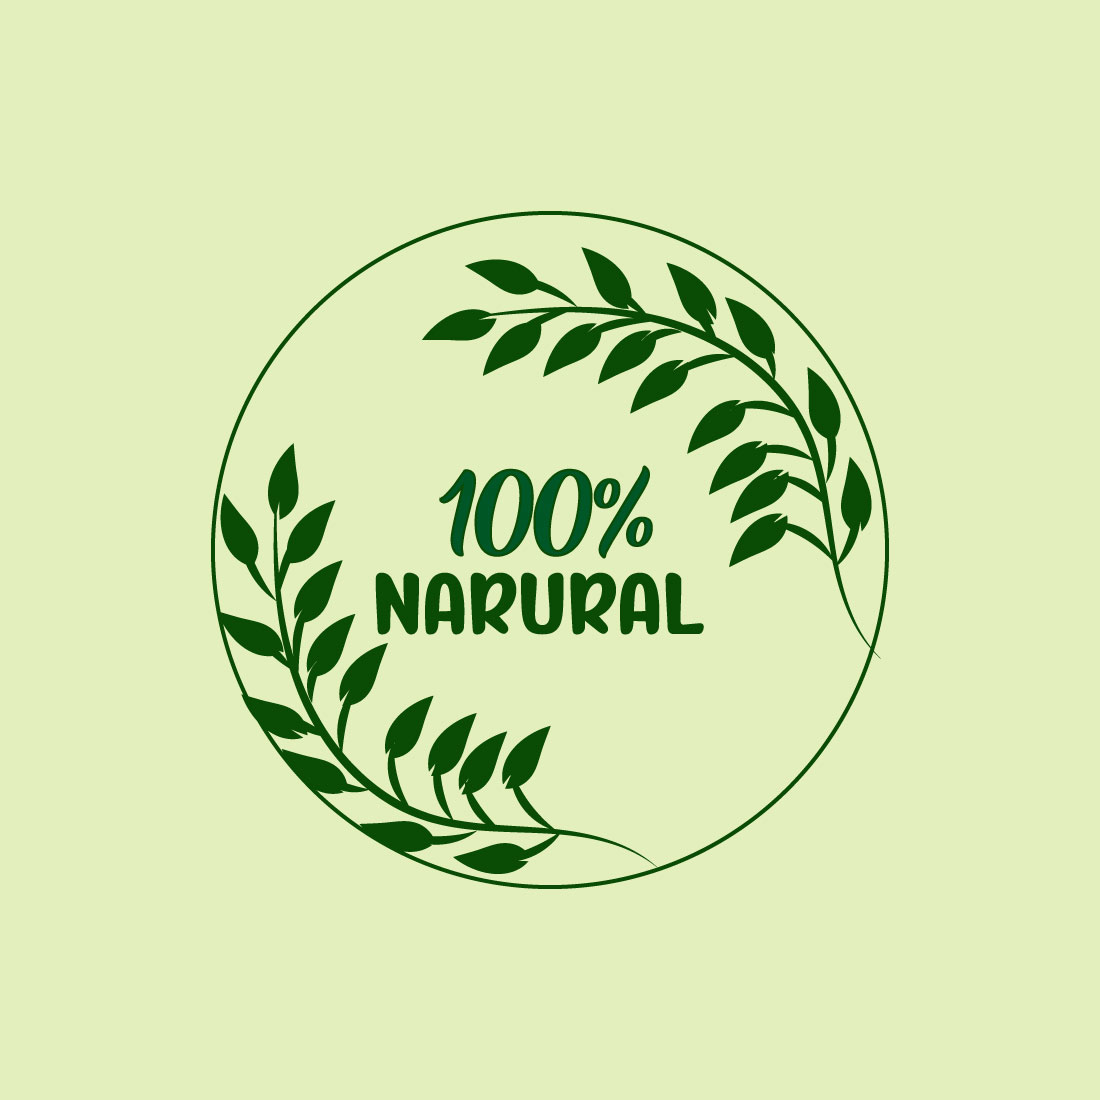 Free natural label logo cover image.